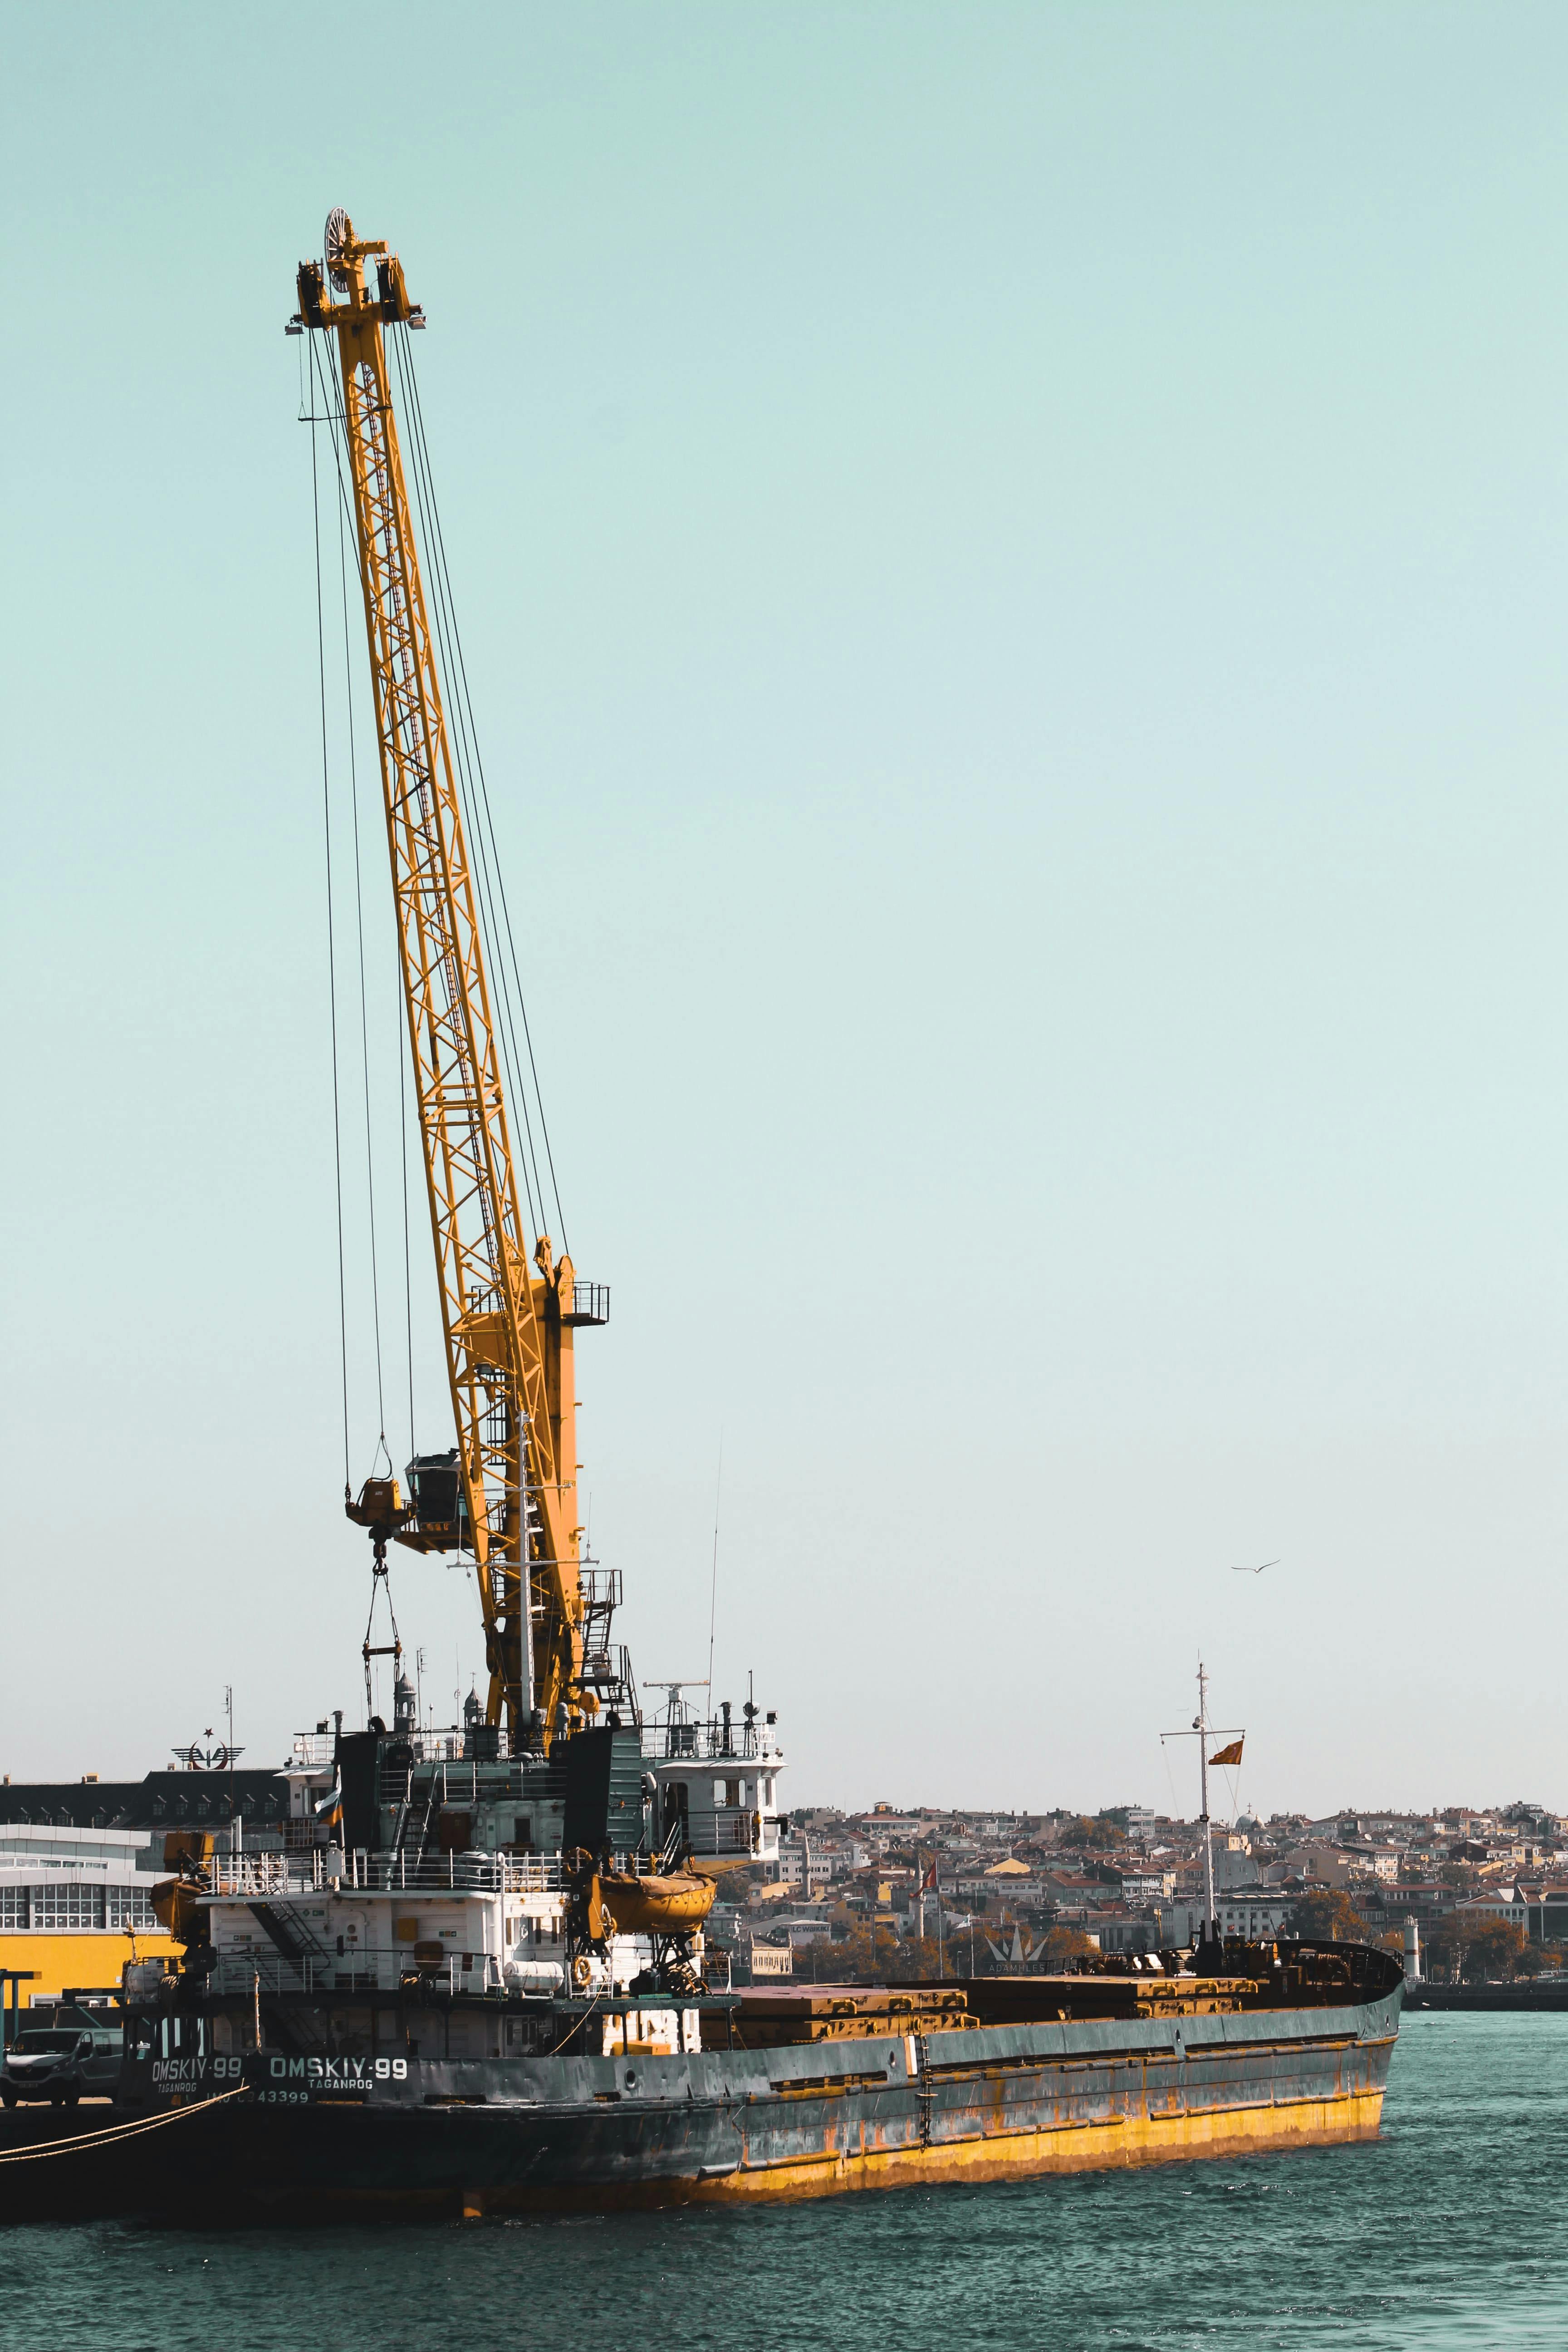 black and yellow crane on ship